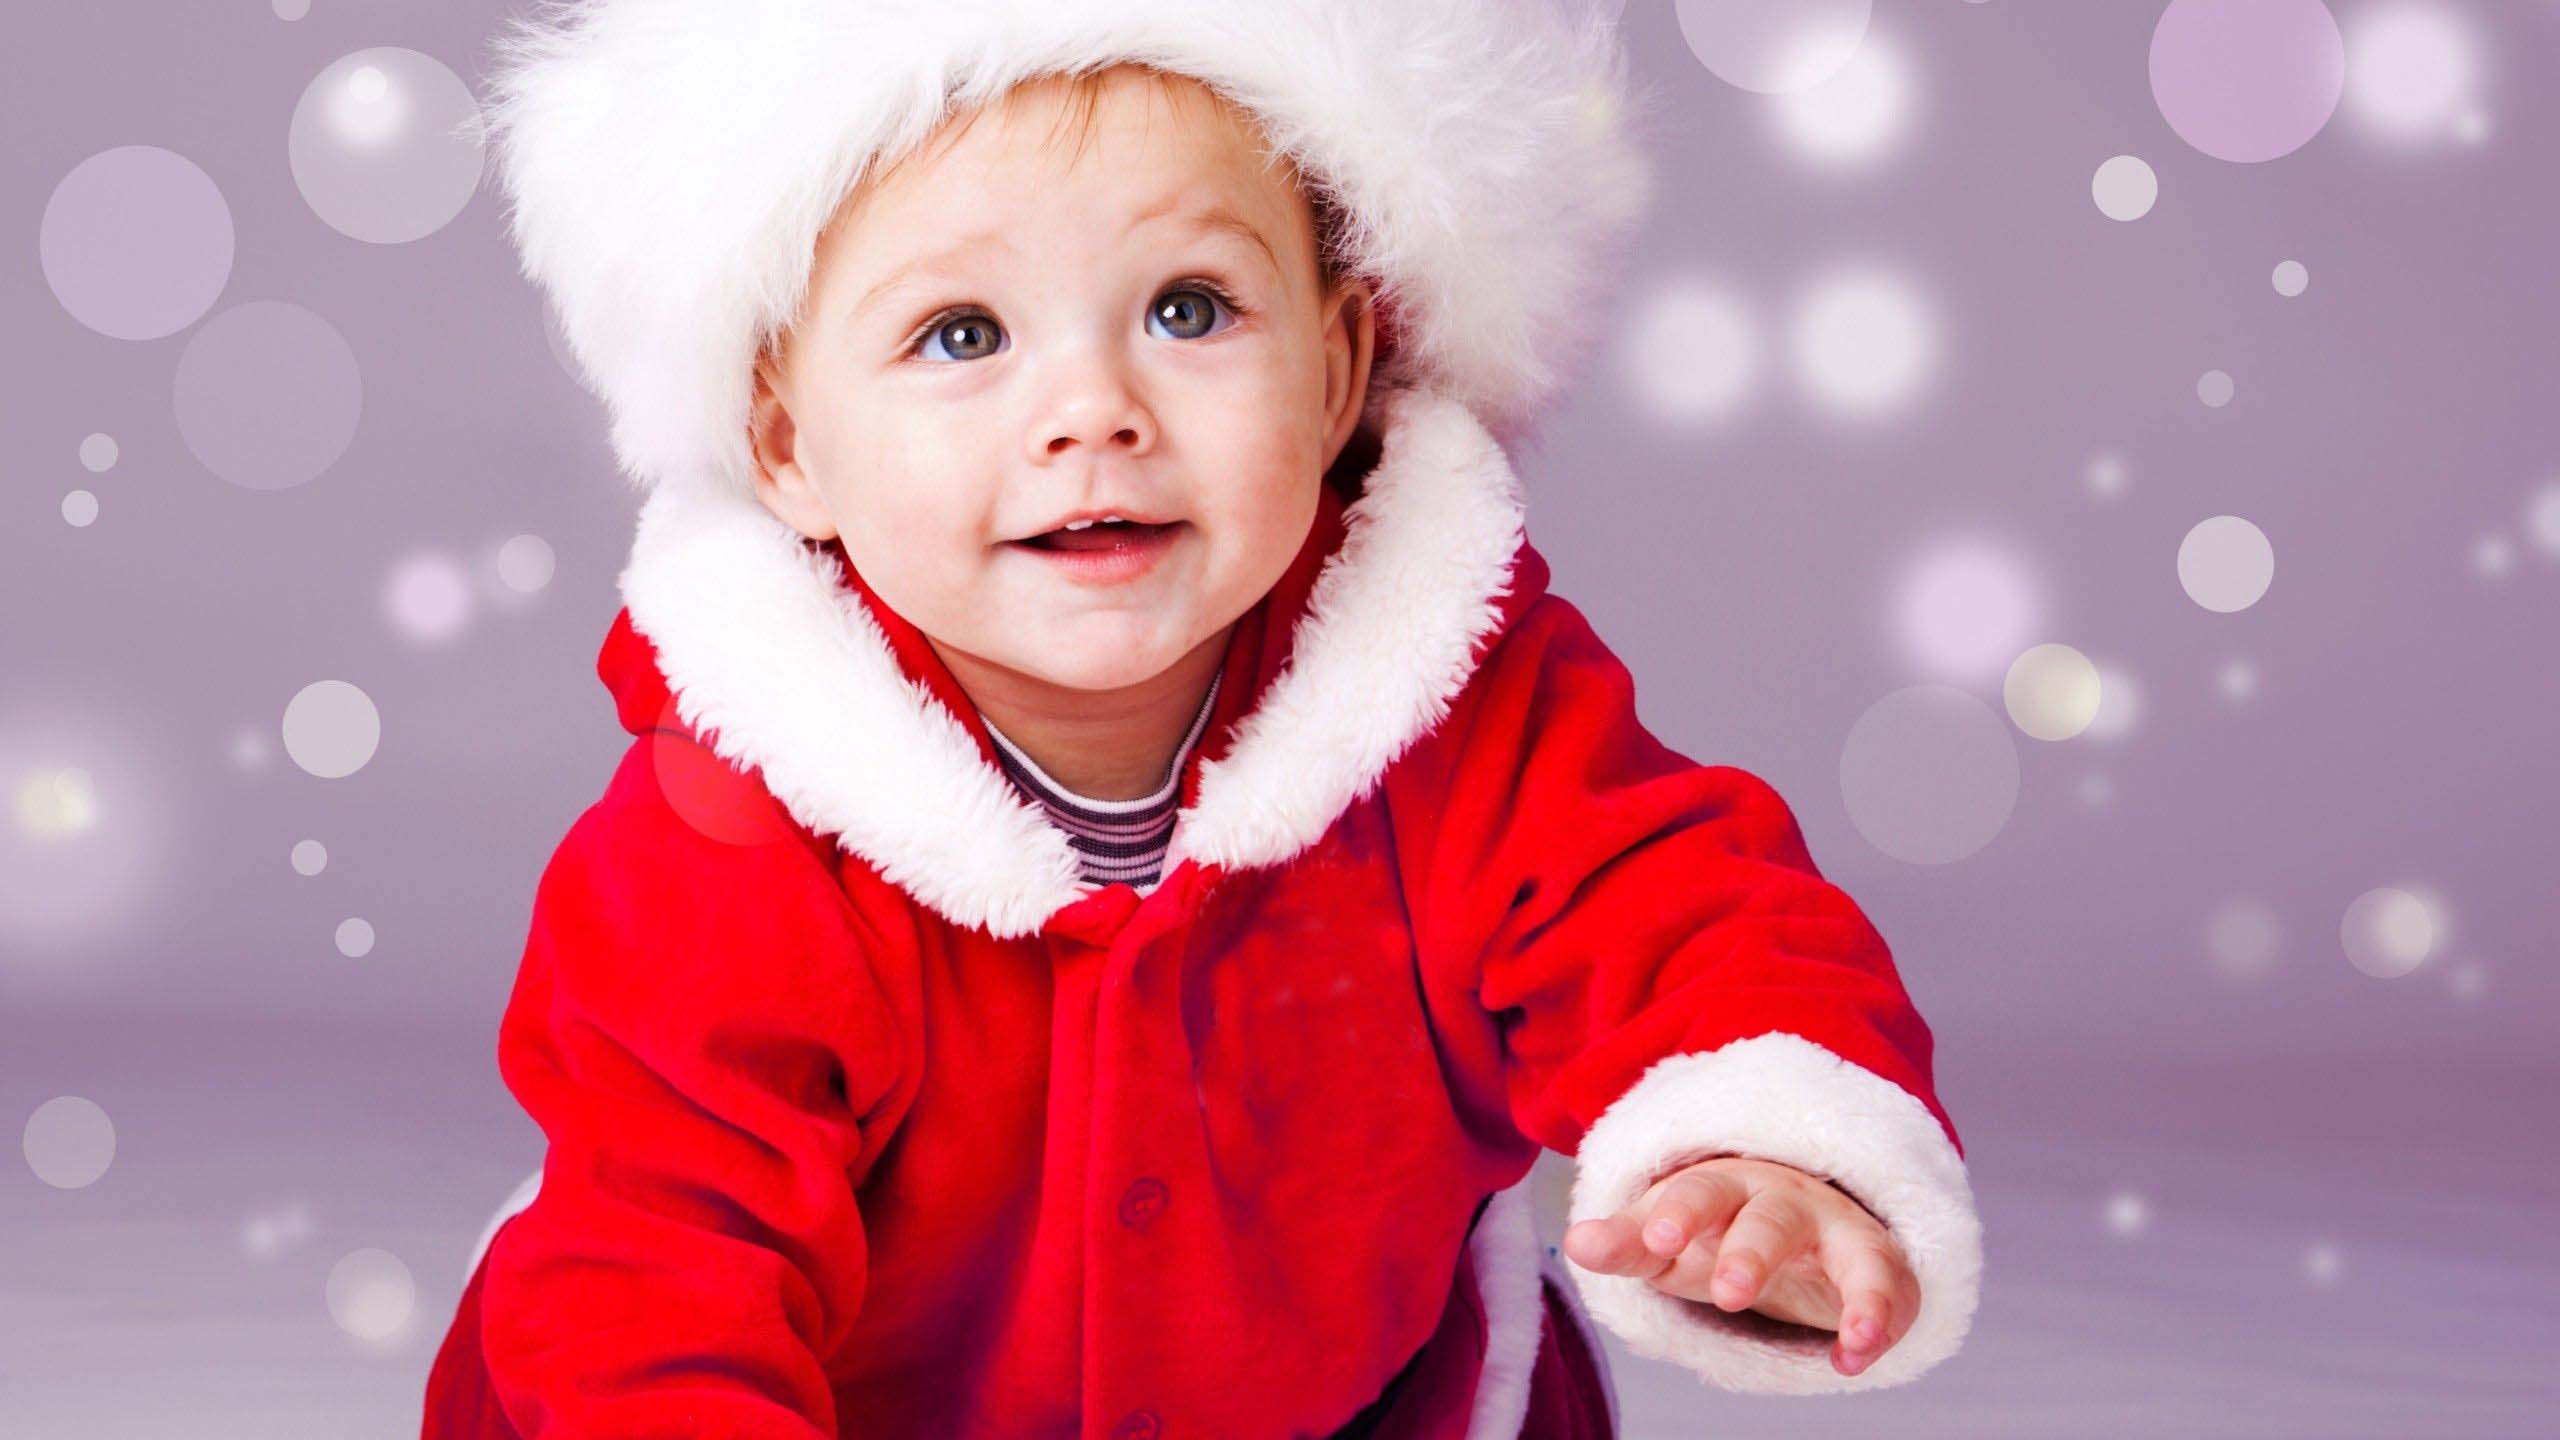 Smiley Cute Baby Boy Is Crawling On Floor Wearing Santa Dress In Bubbles Background HD Cute